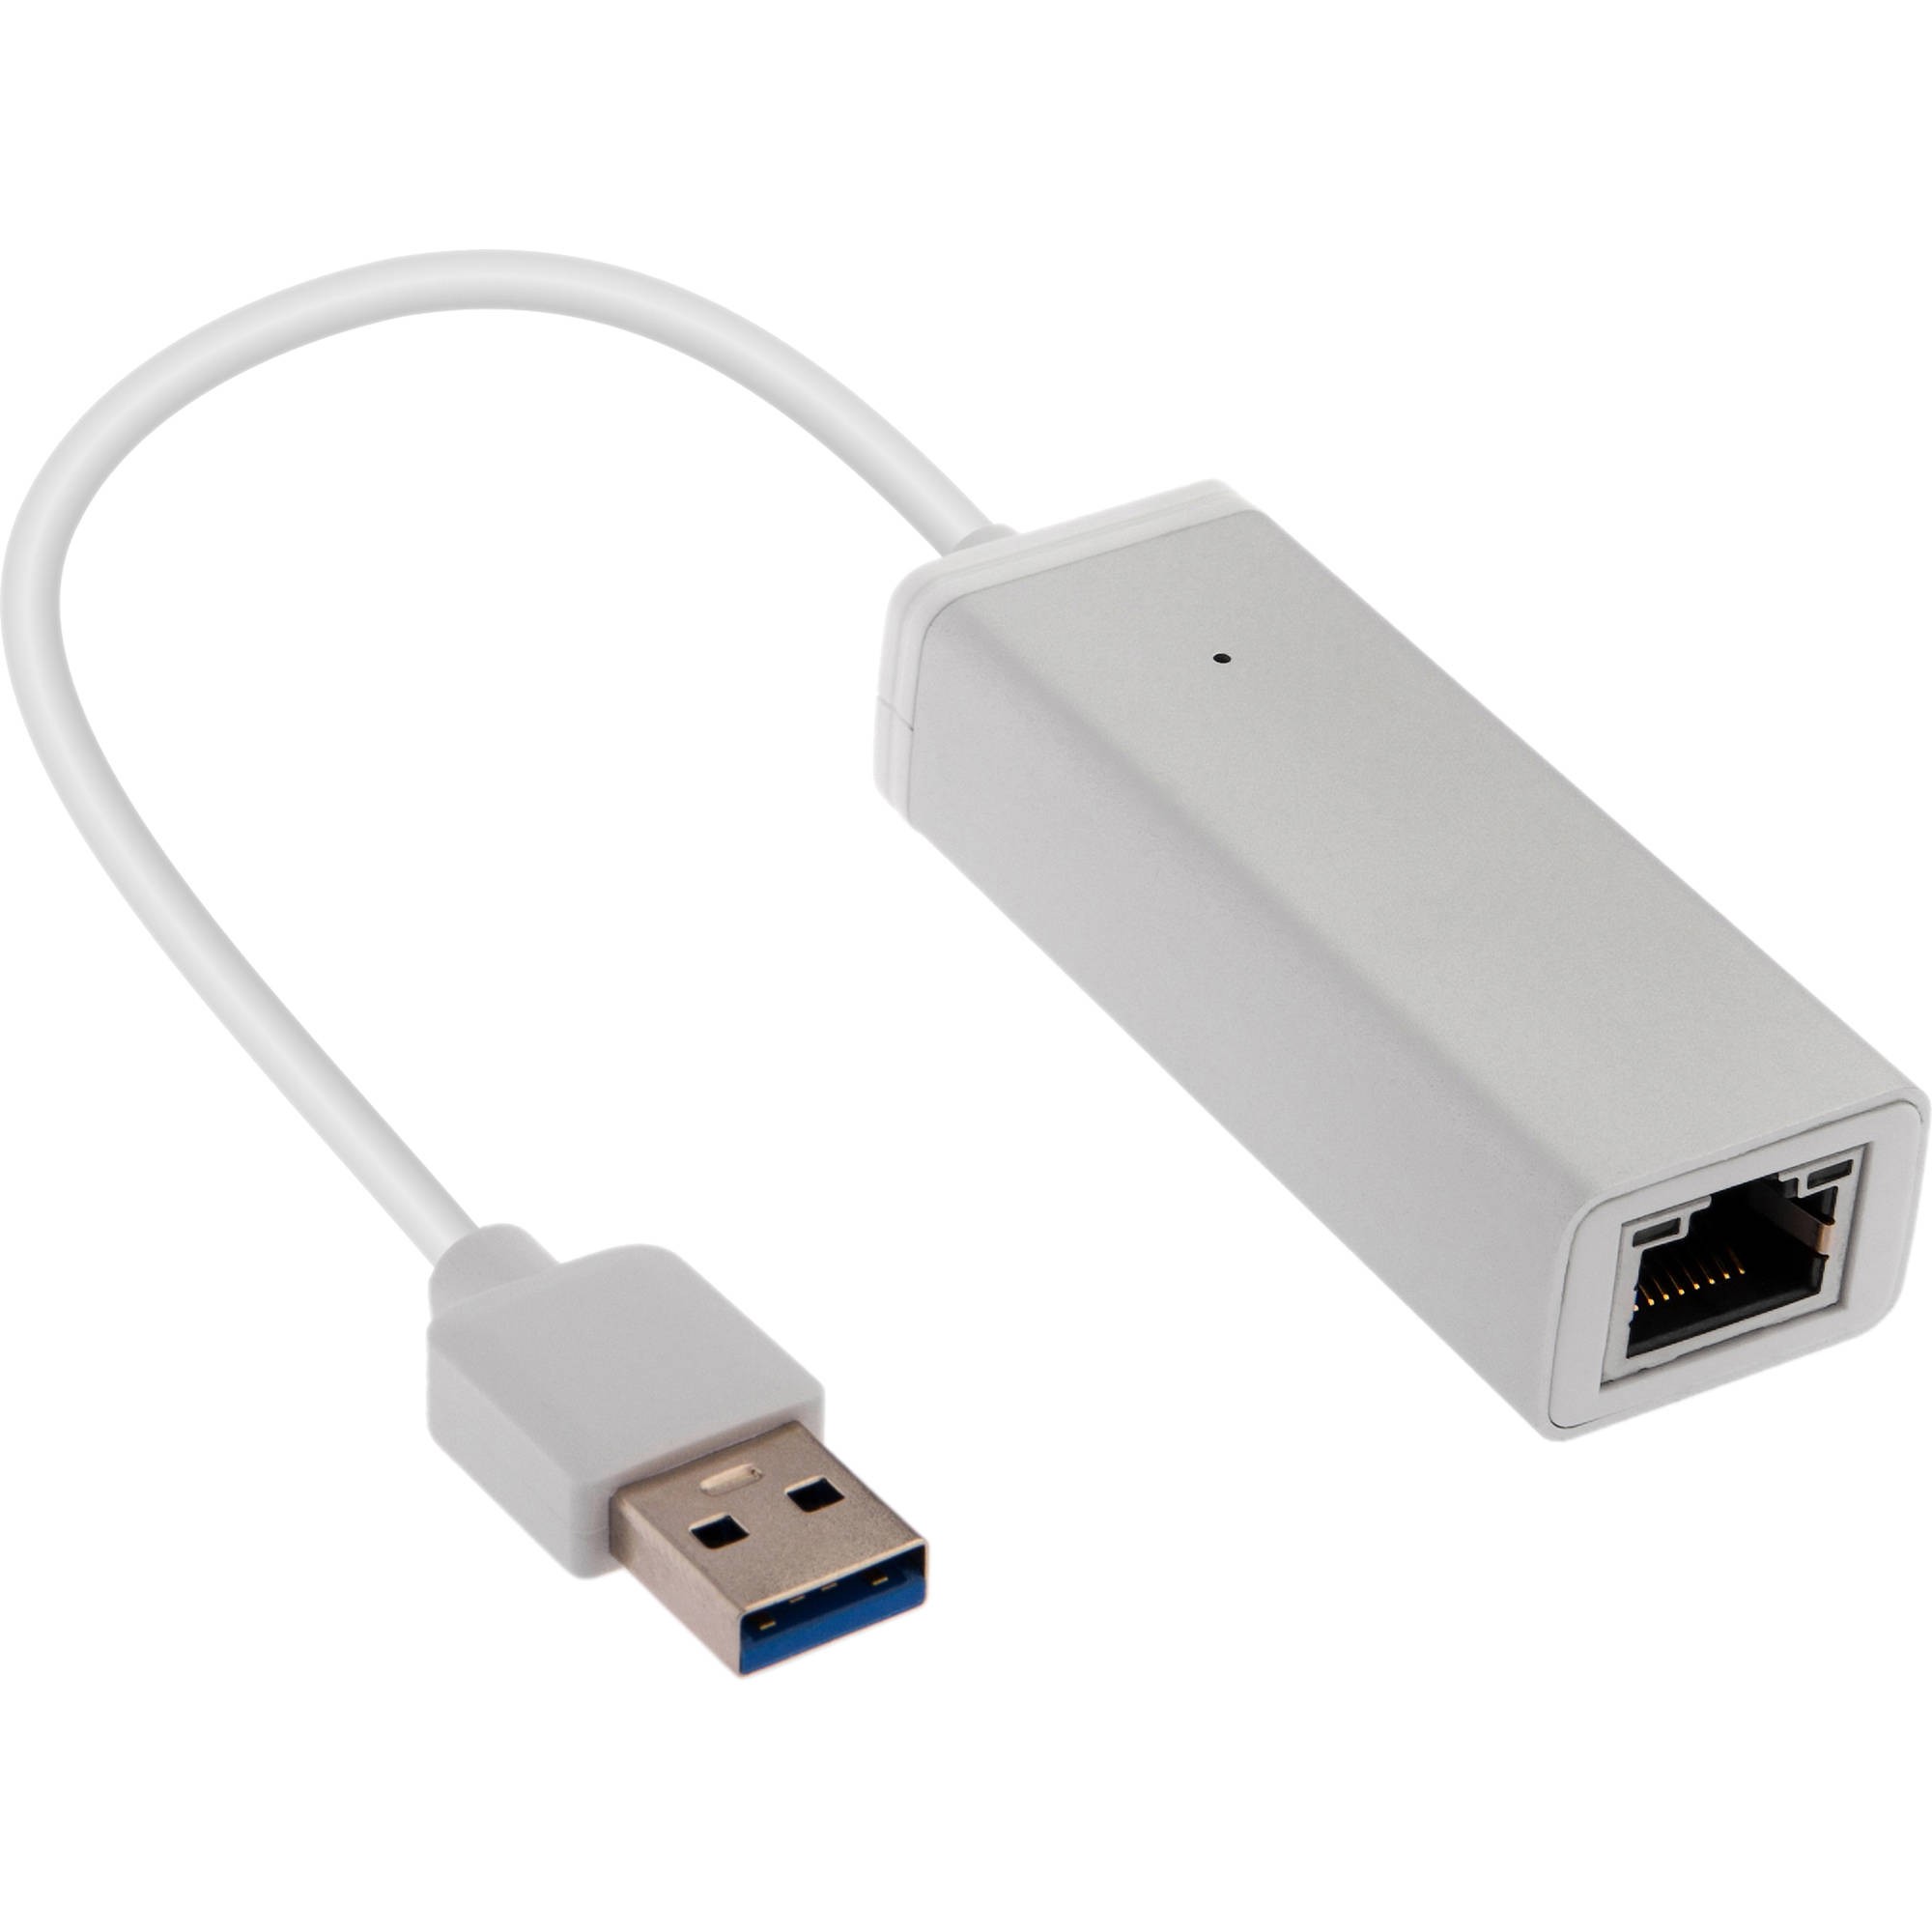 Usb vid 2c4e. Адаптер RJ 45 USB 3.0. Ethernet-адаптер, Интерфейс USB 2.0. USB Ethernet адаптер USB to rj45. Переходник USB 2.0 - RJ-45.